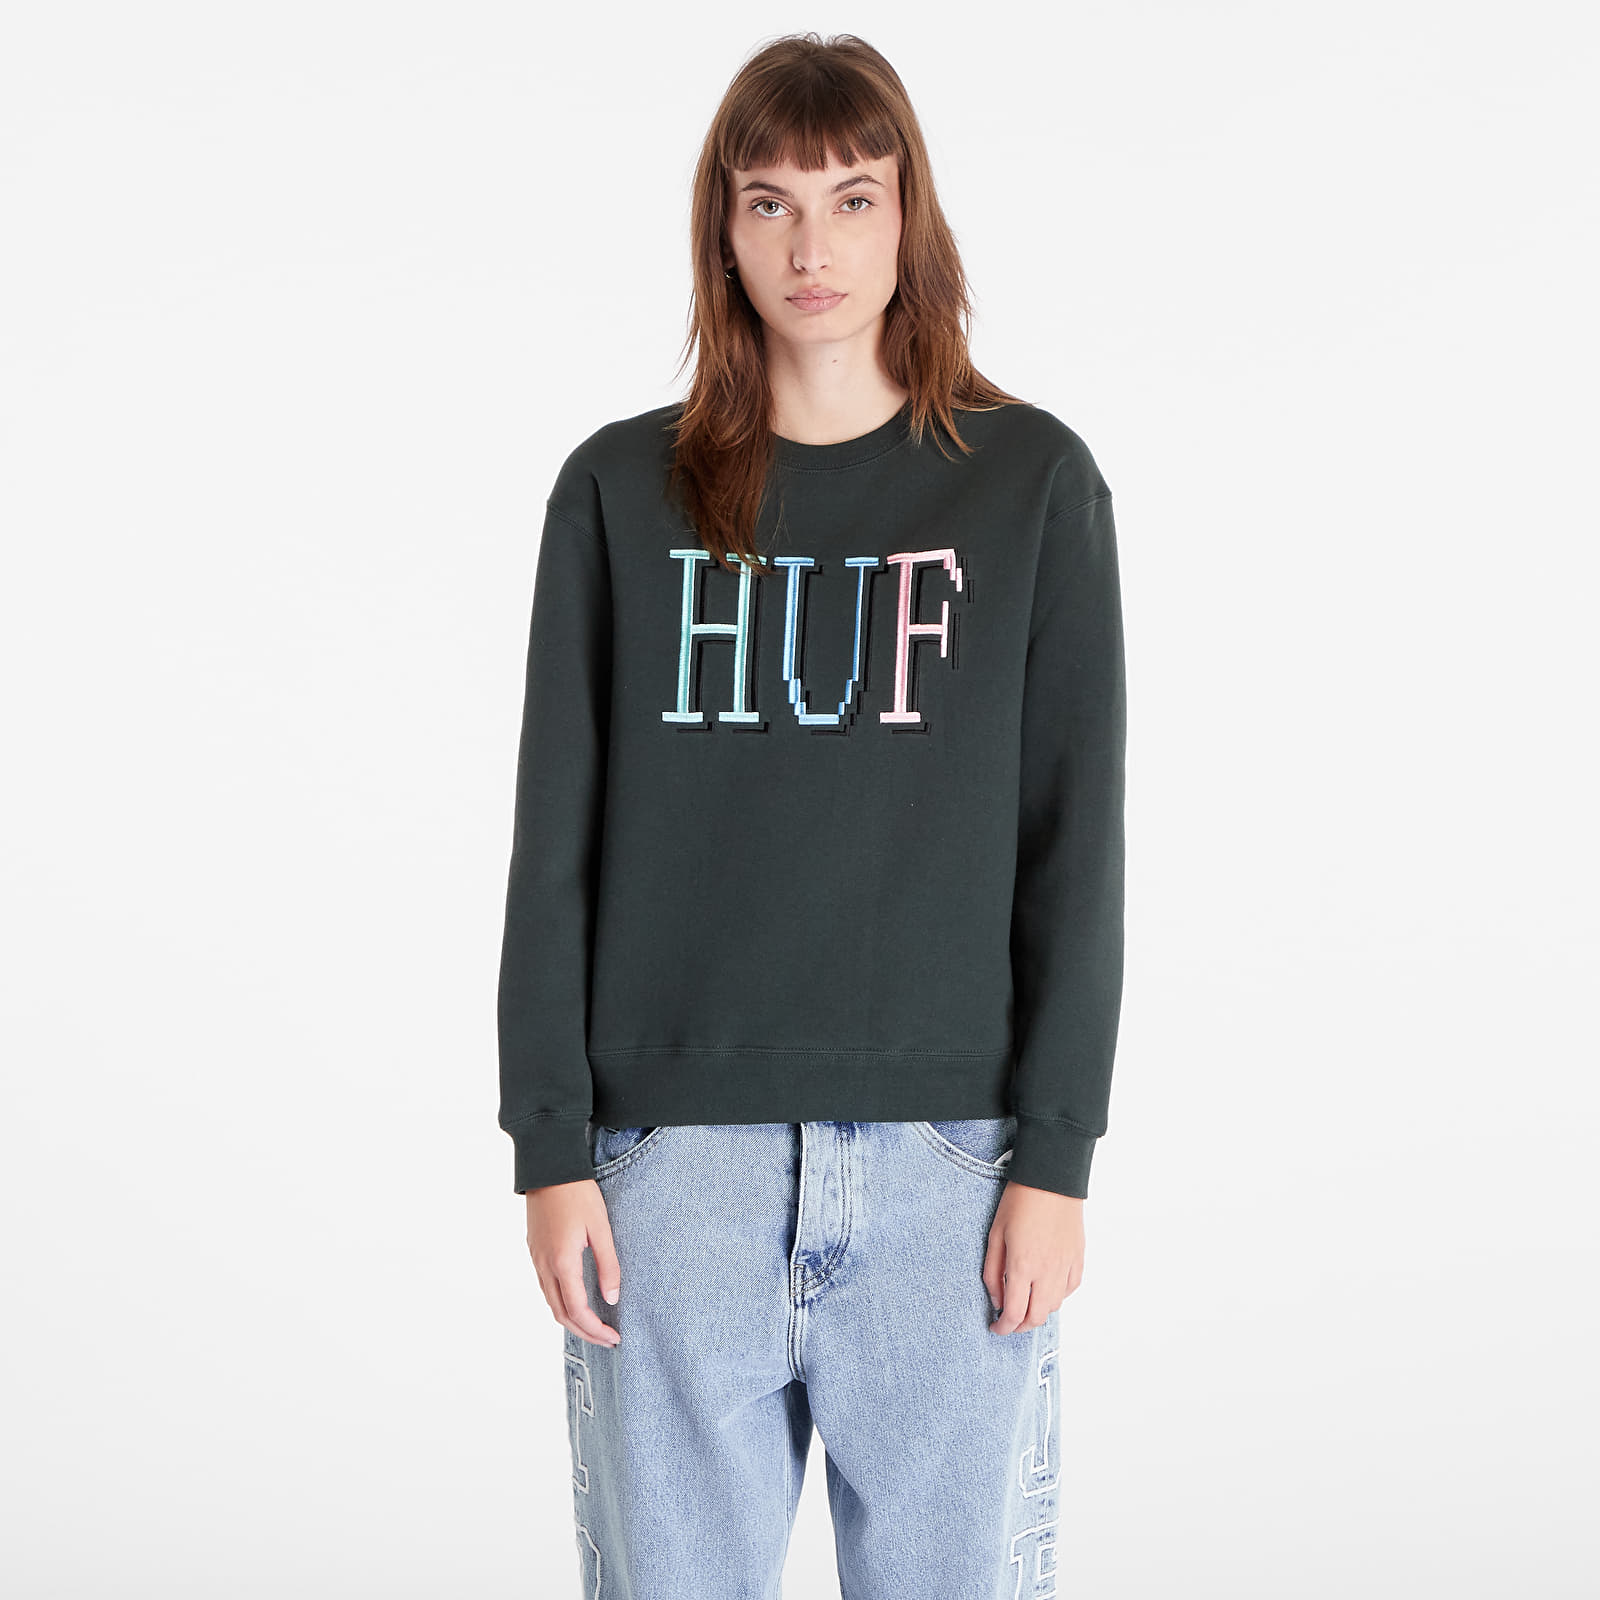 HUF - 8-bit crewneck sweatshirt dark green